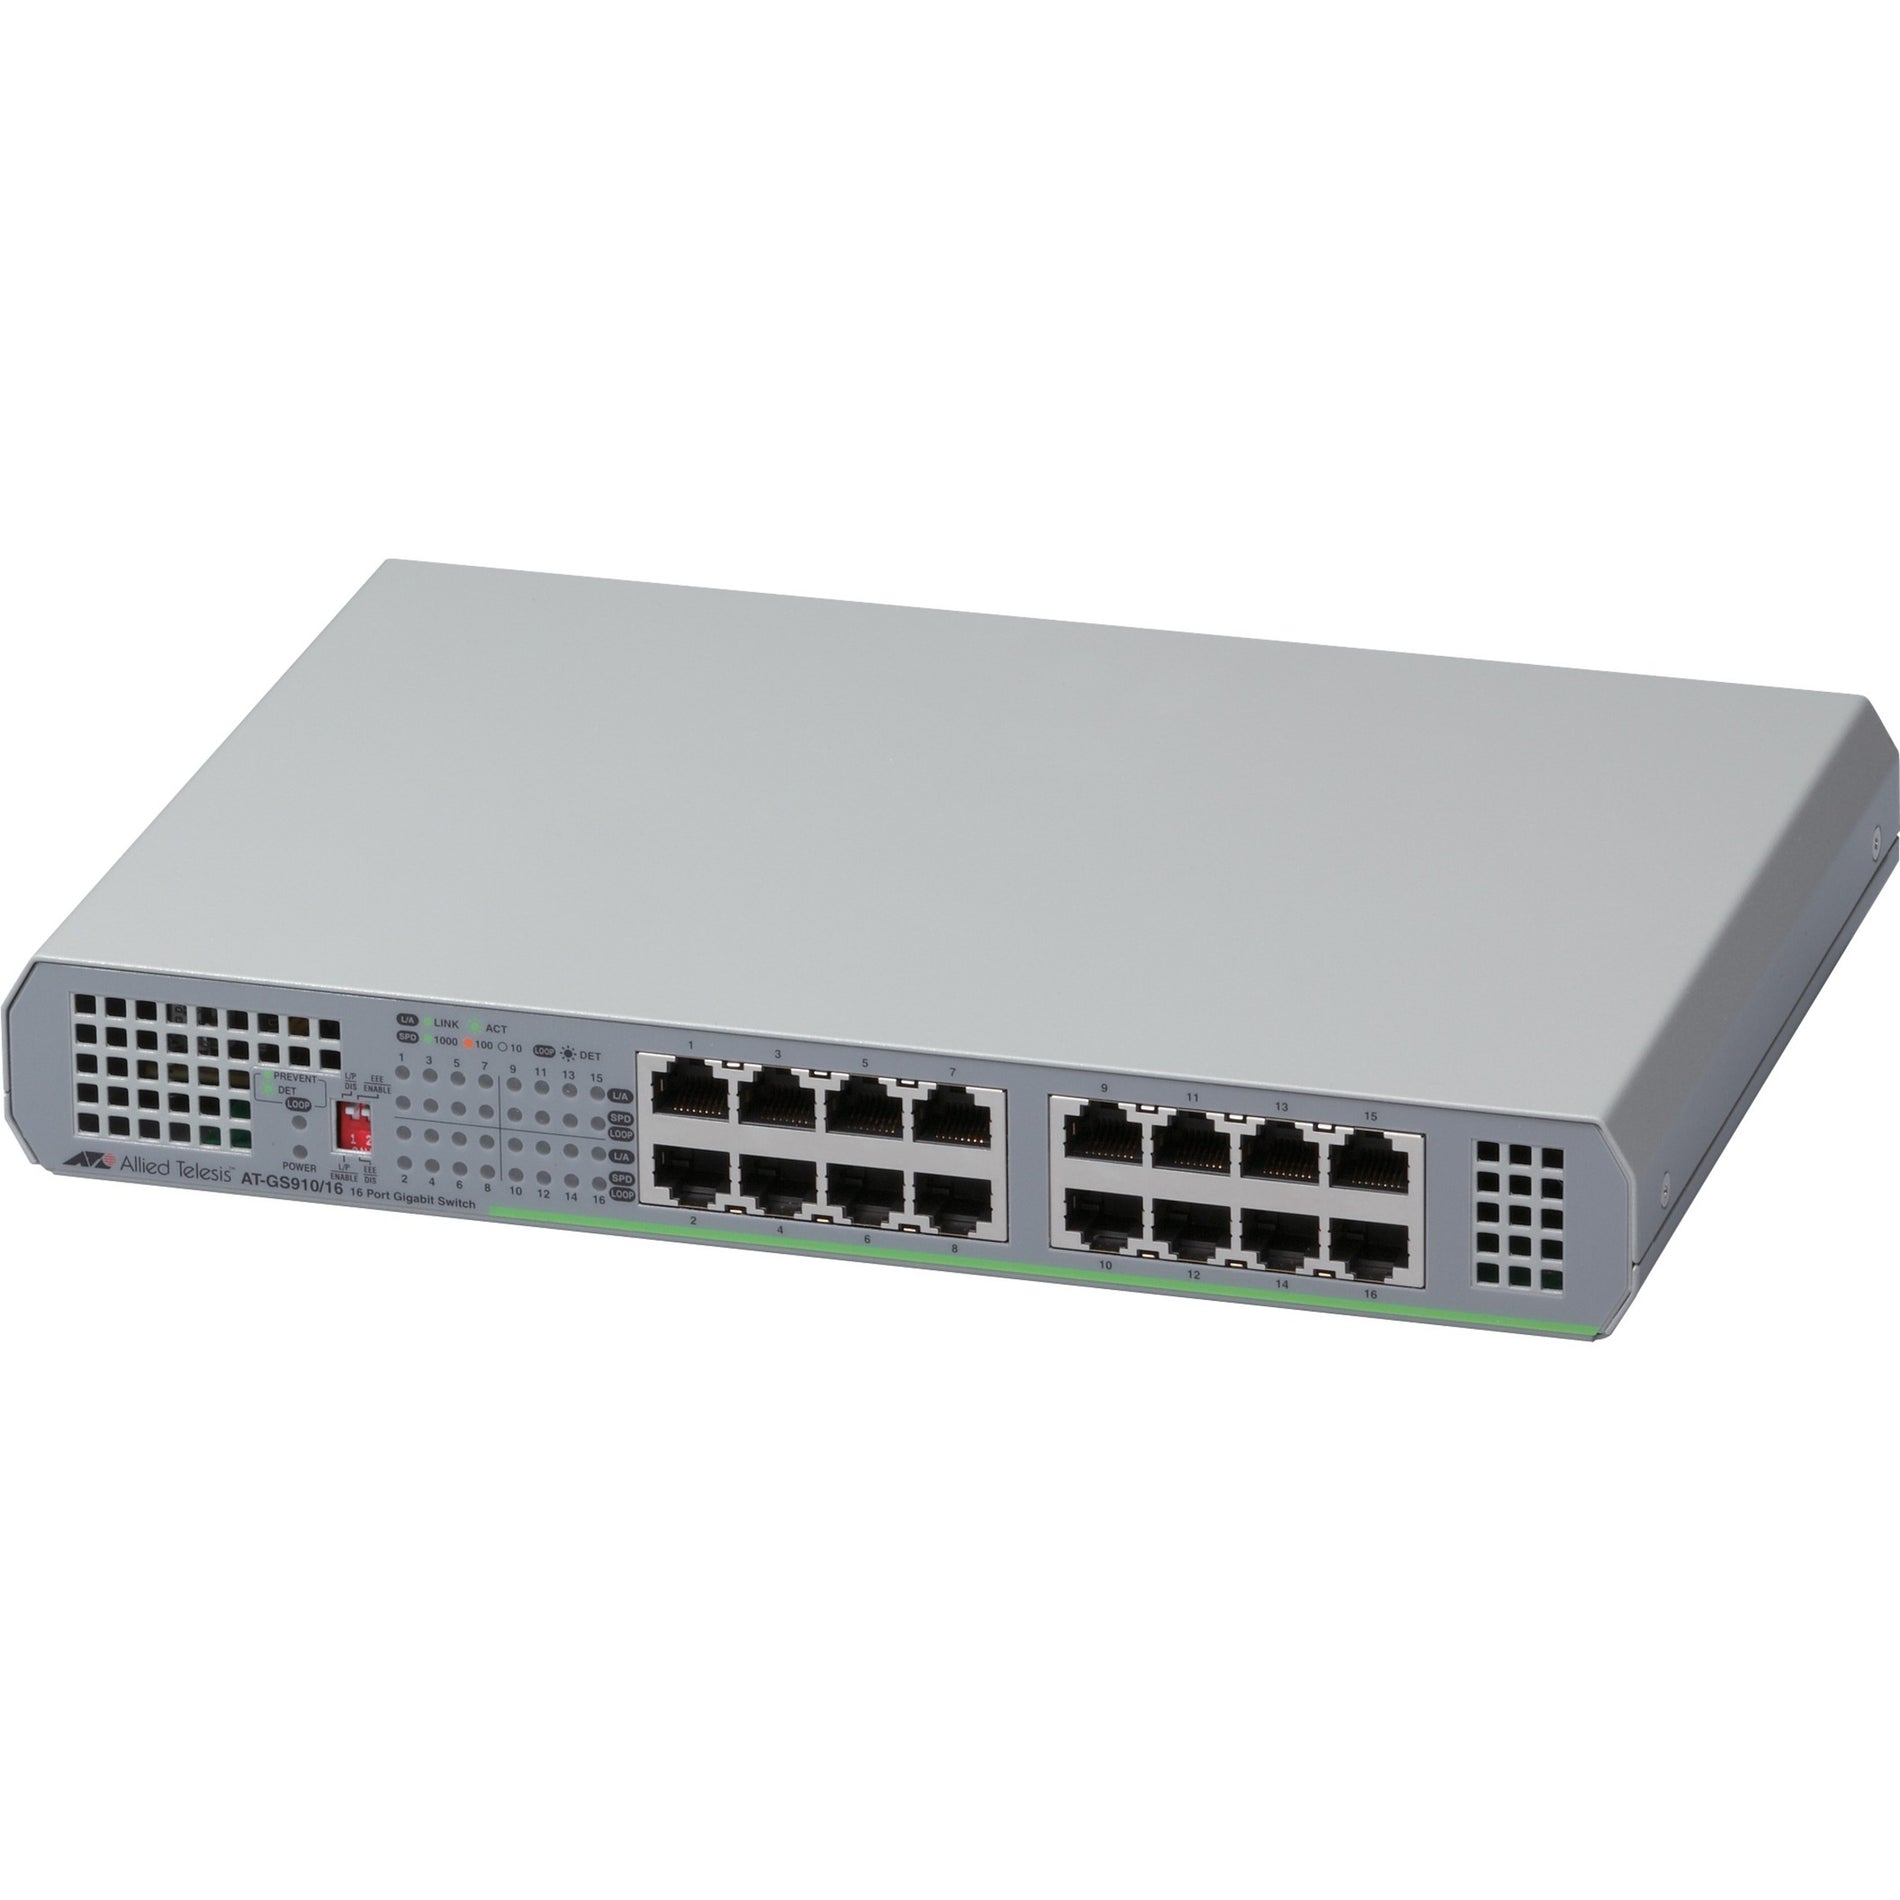 Producto: Allied Telesis AT-GS910/16-10 CentreCOM 16-Puerto 10/100/1000T Switch no Gestionado con PSU Interna Red Ethernet Gigabit. Marca: Allied Telesis